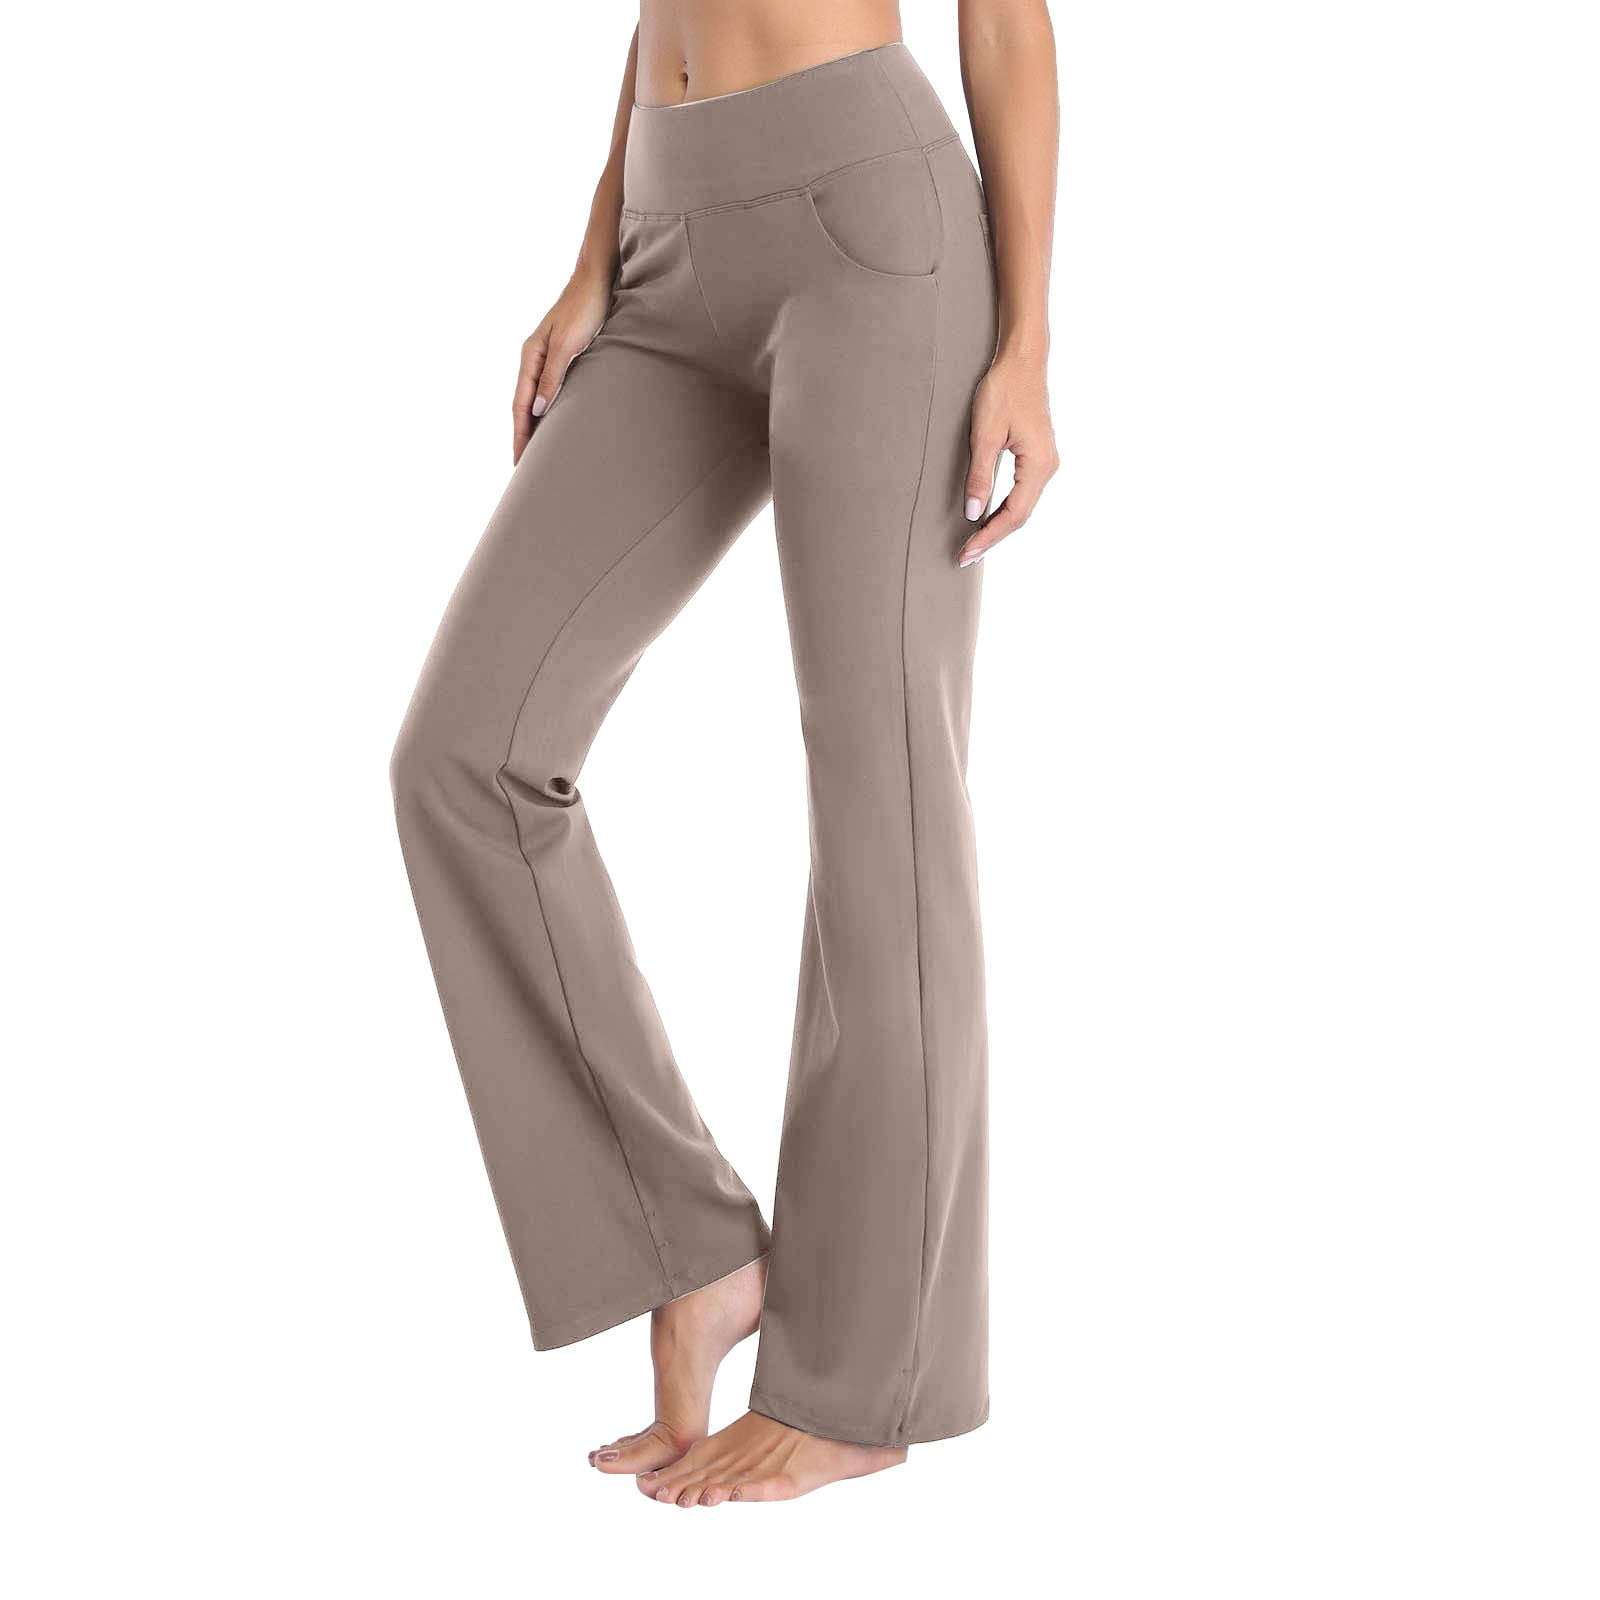 XZHGS Women's Pants Size 14 Short Yoga Pants with Pockets High